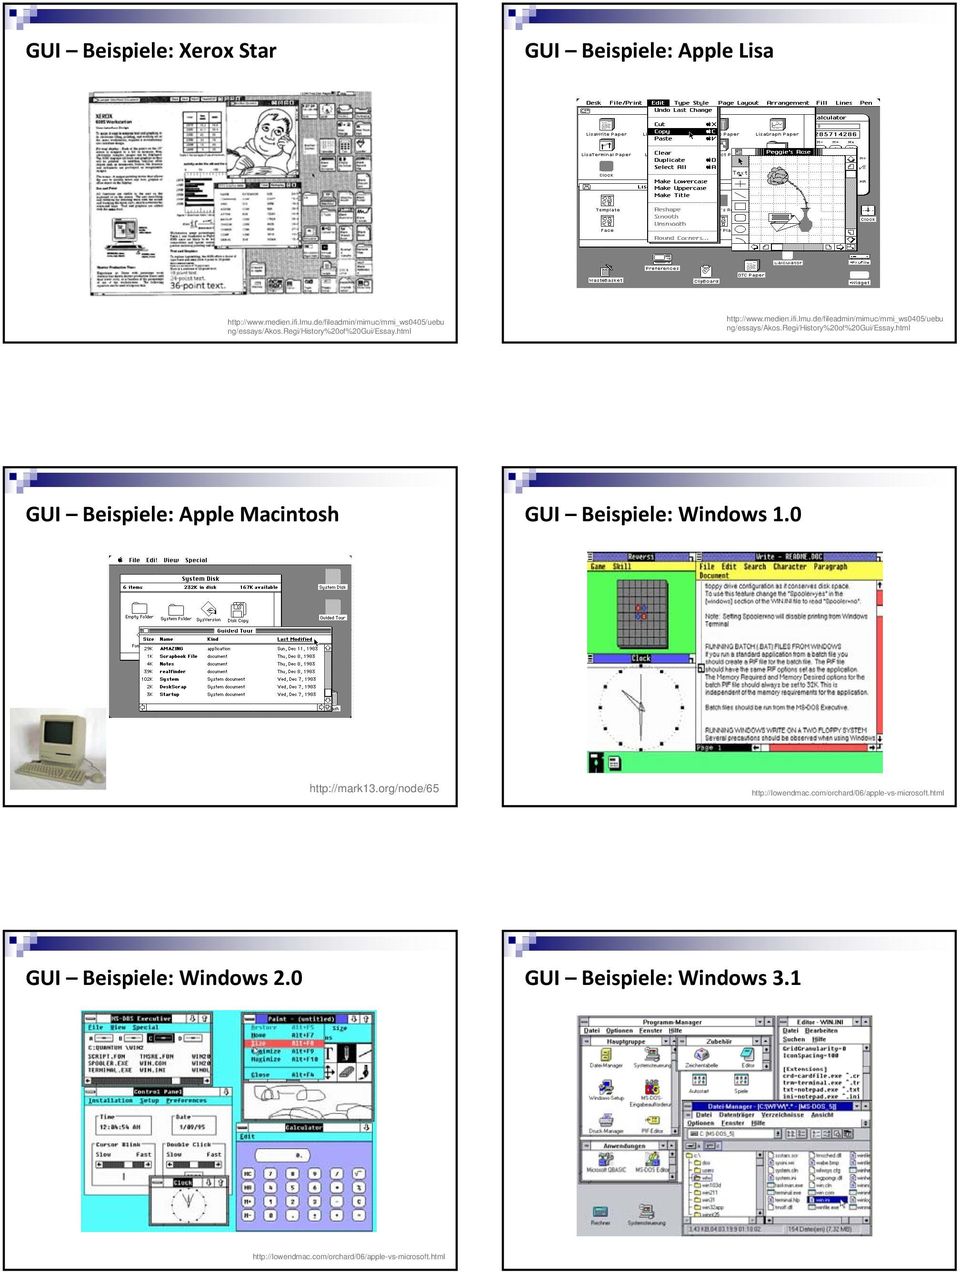 regi/history%20of%20gui/essay.html GUI Beispiele: Apple Macintosh GUI Beispiele: Windows 1.0 http://mark13.